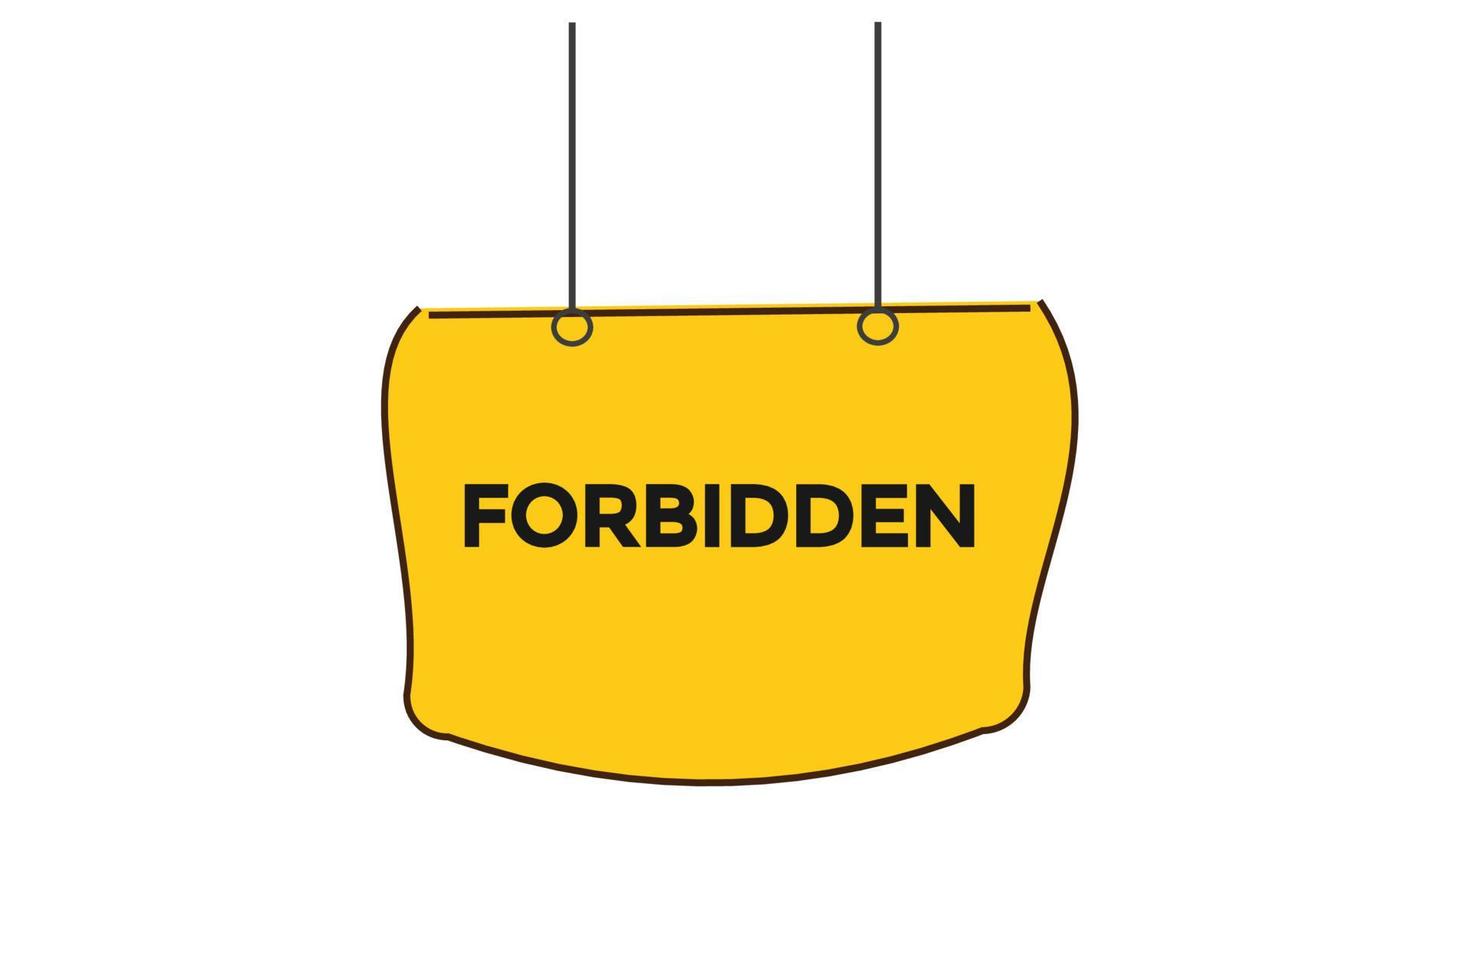 forbidden vectors.sign label bubble speech forbidden vector